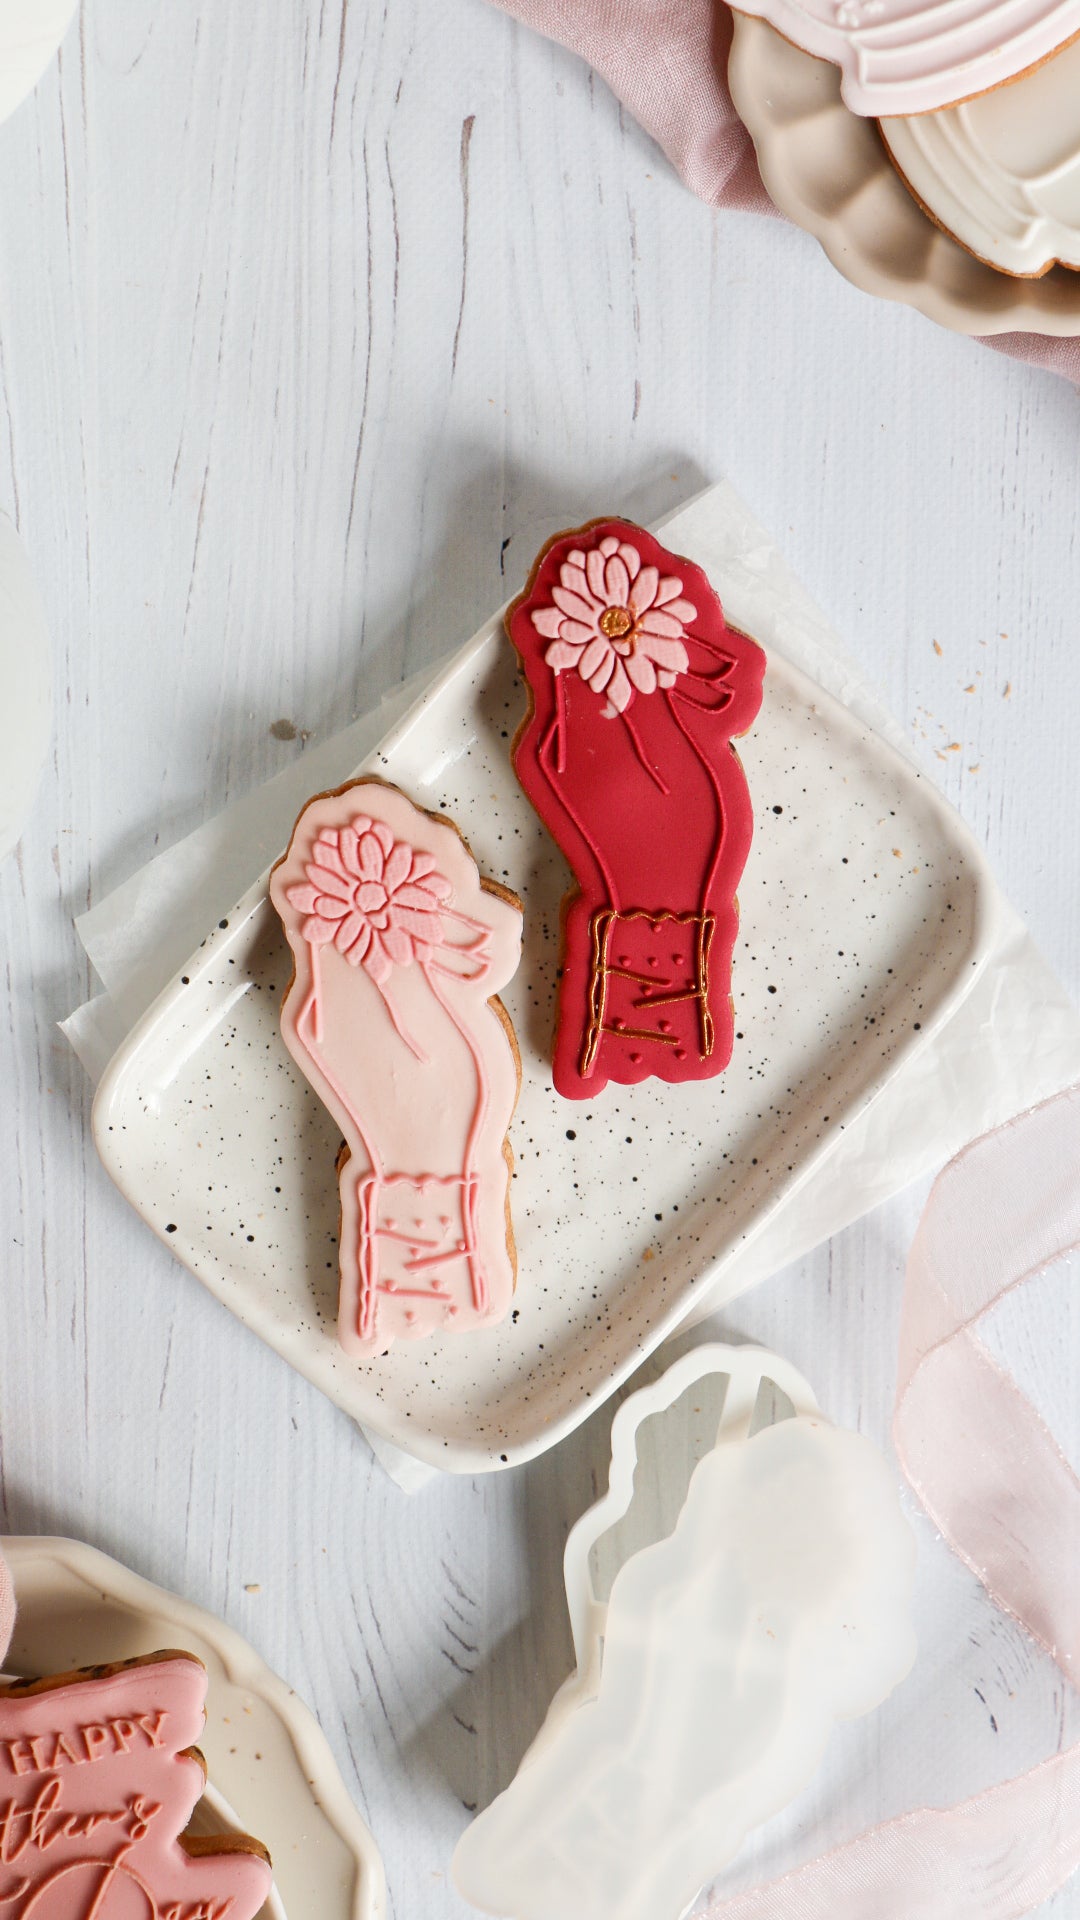 Hand holding flower + cookie cutter